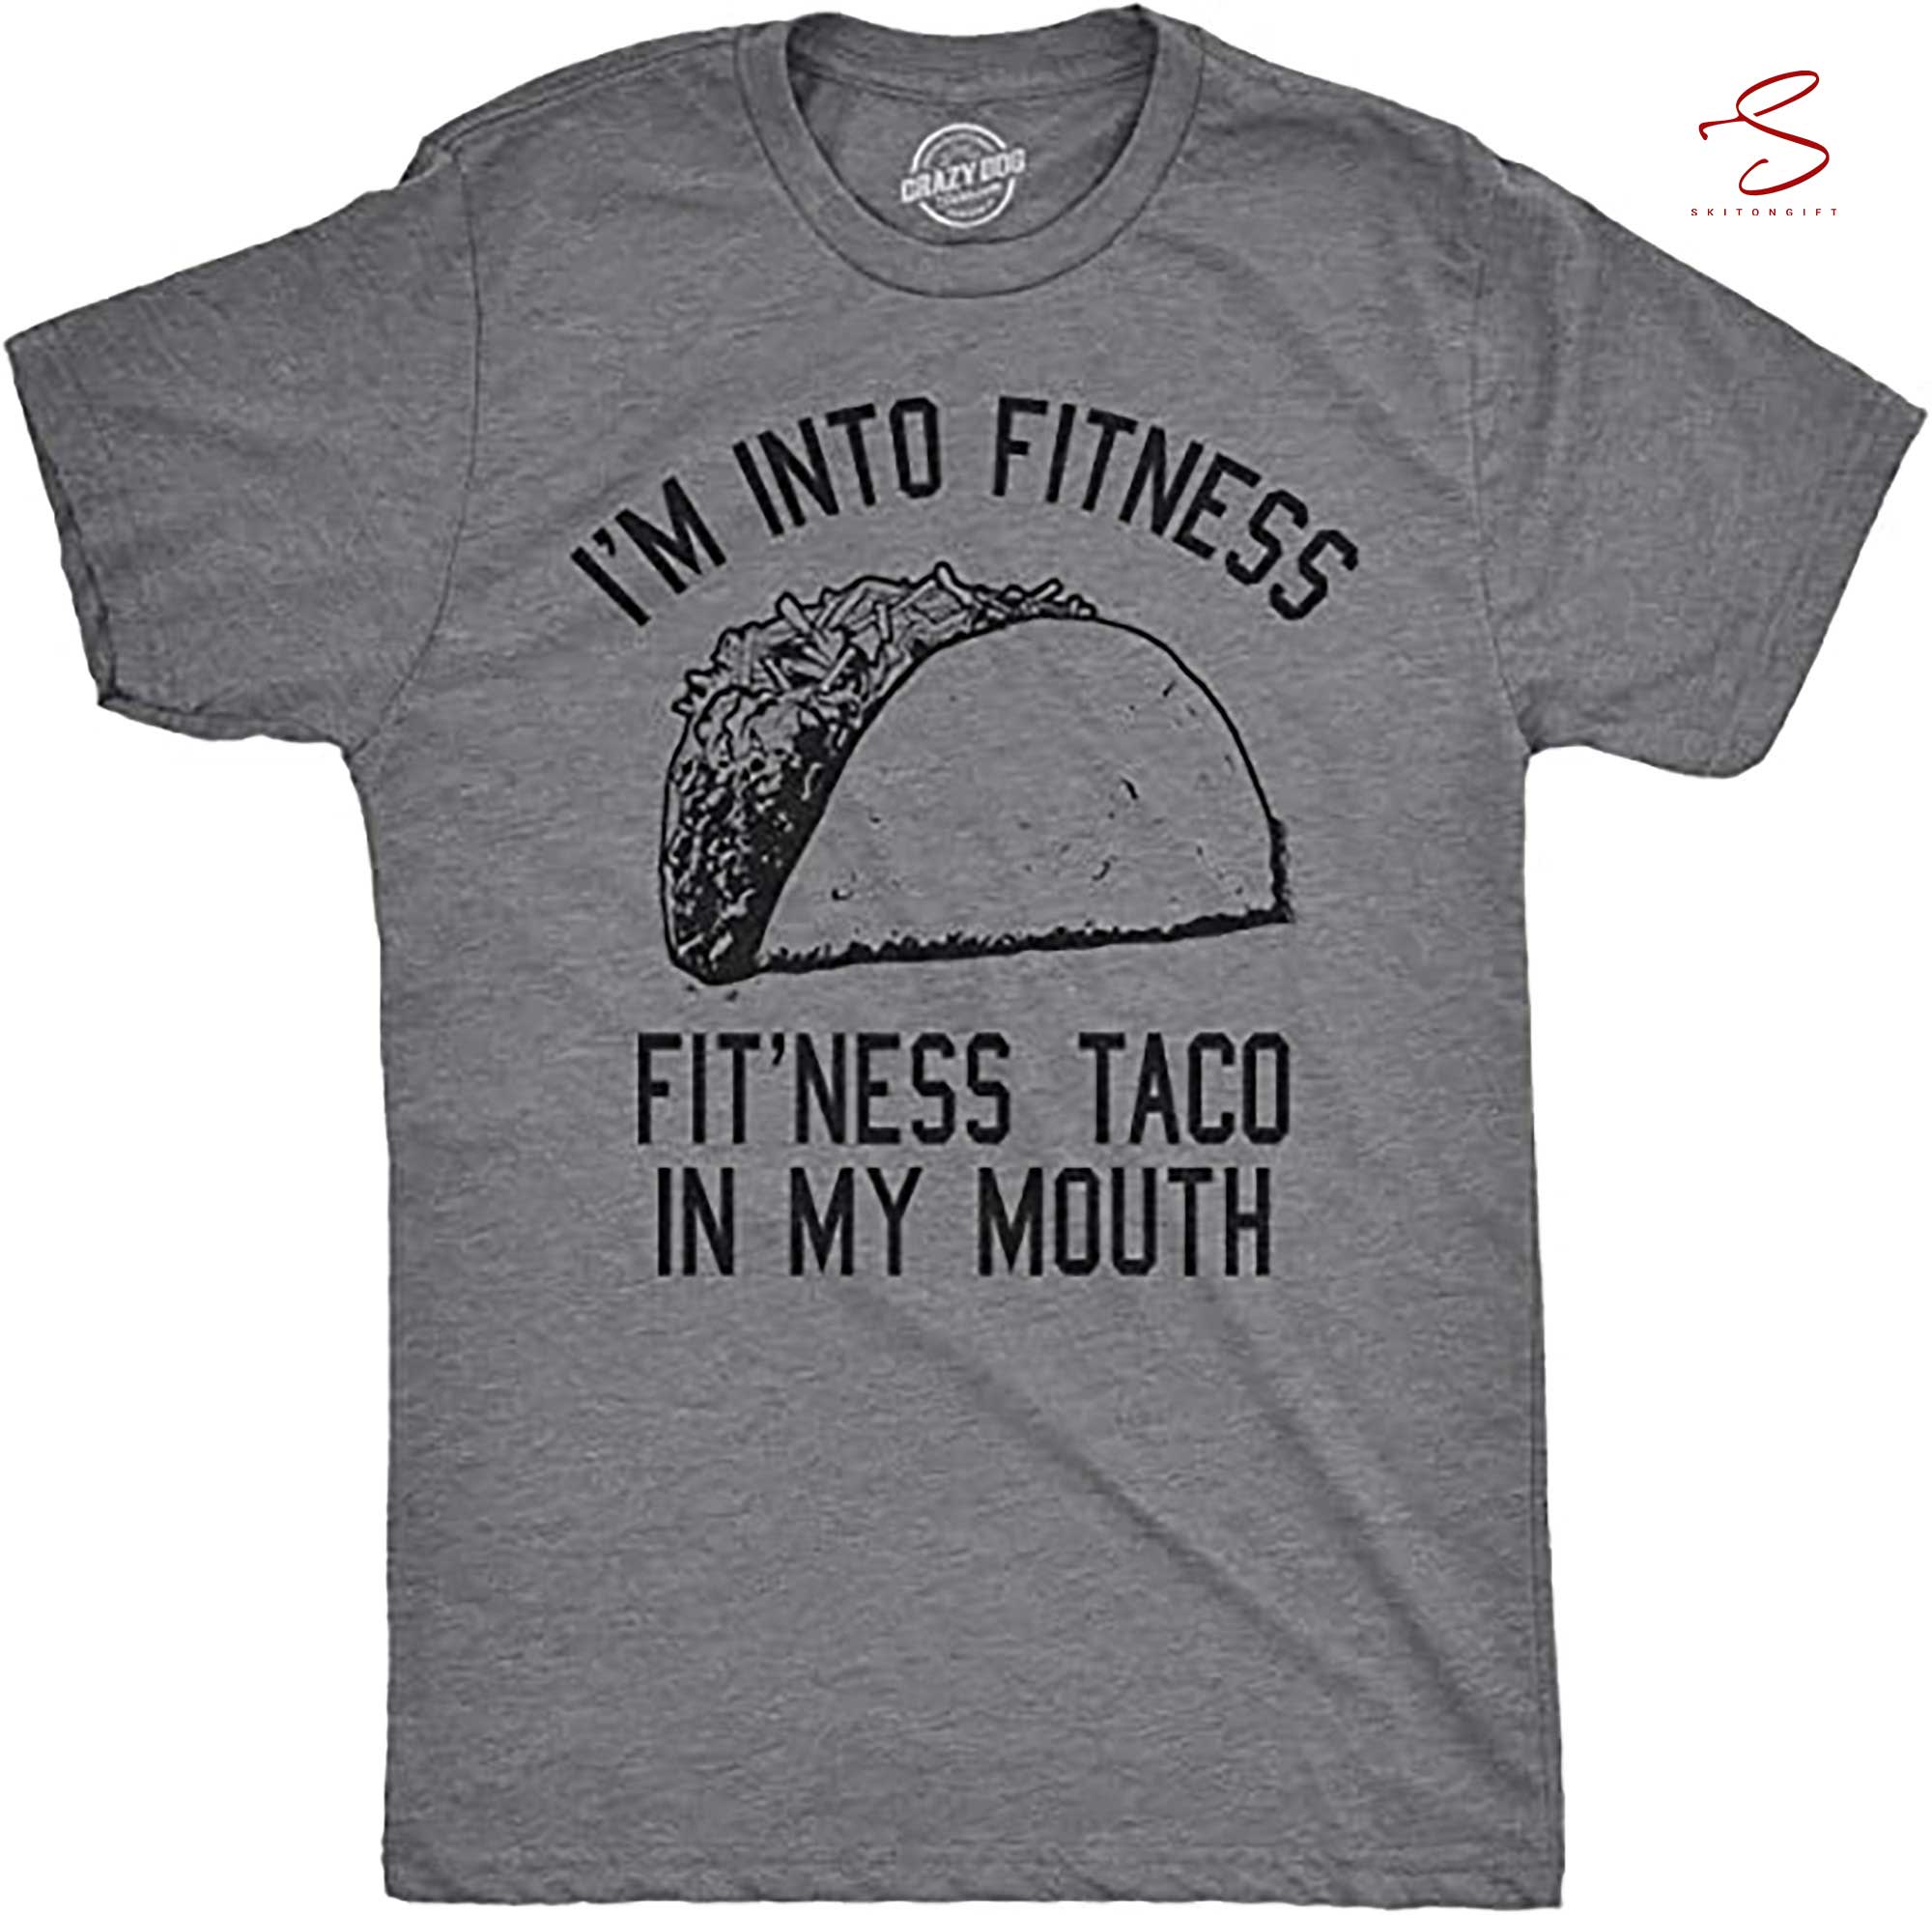 Skitongift Mens Fitness Funny T Shirt Humorous Gym Graphic Novelty Sarcastic Tee